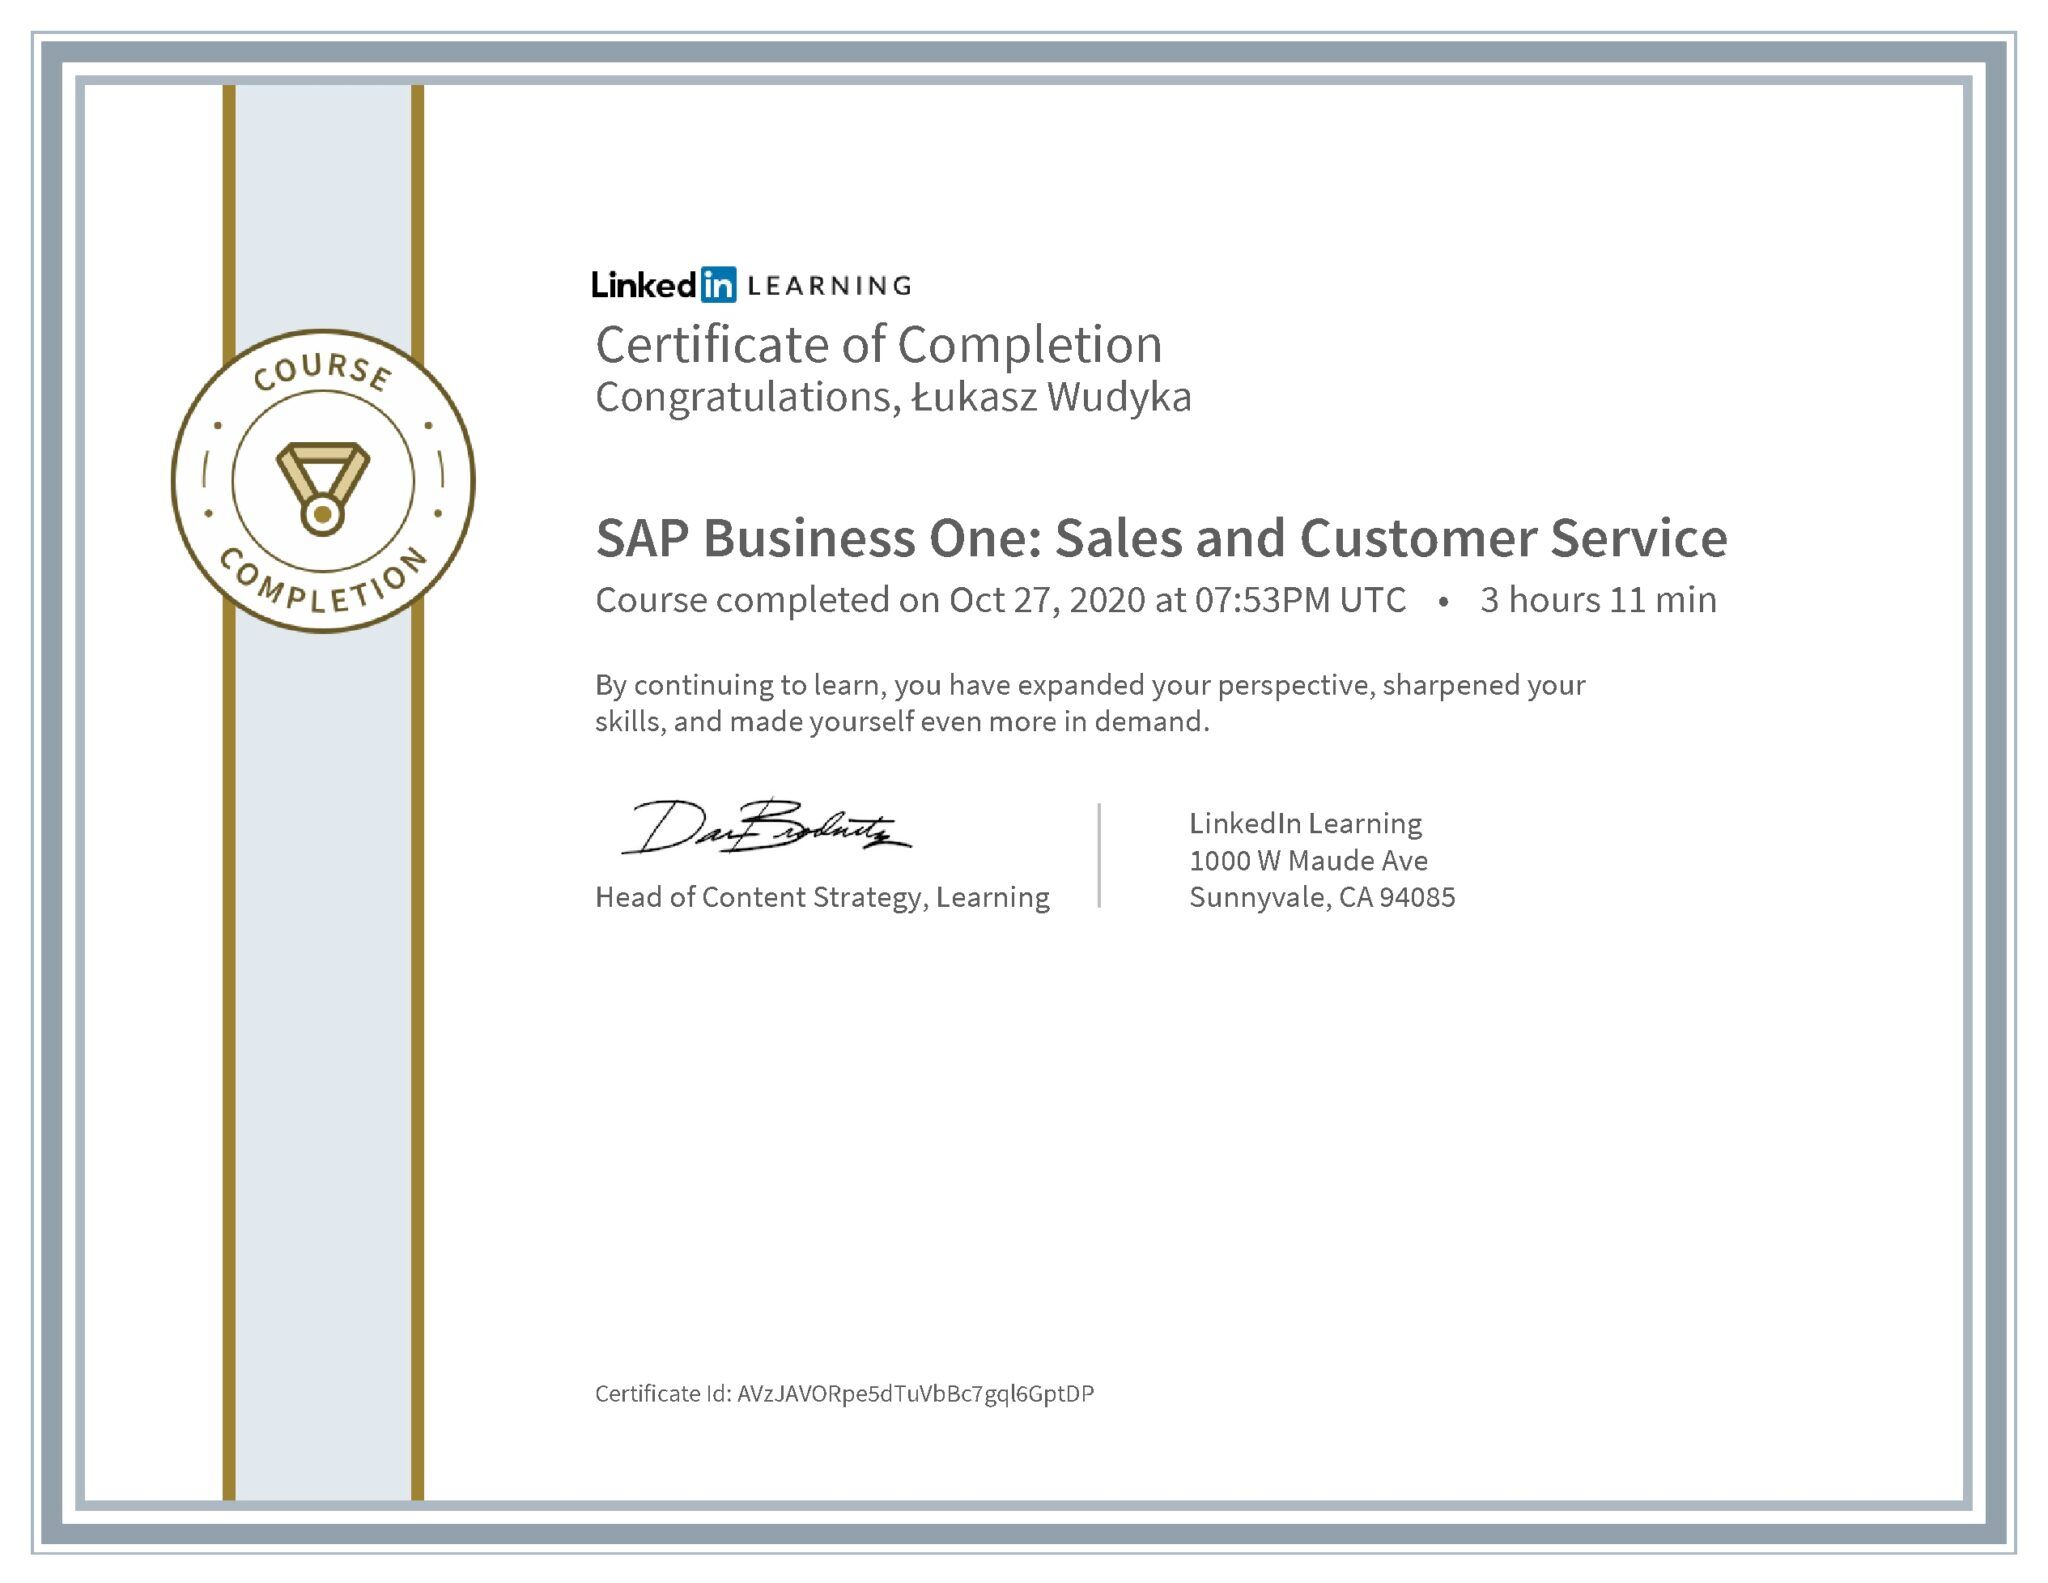 Łukasz Wudyka certyfikat LinkedIn SAP Business One: Sales and Customer Service